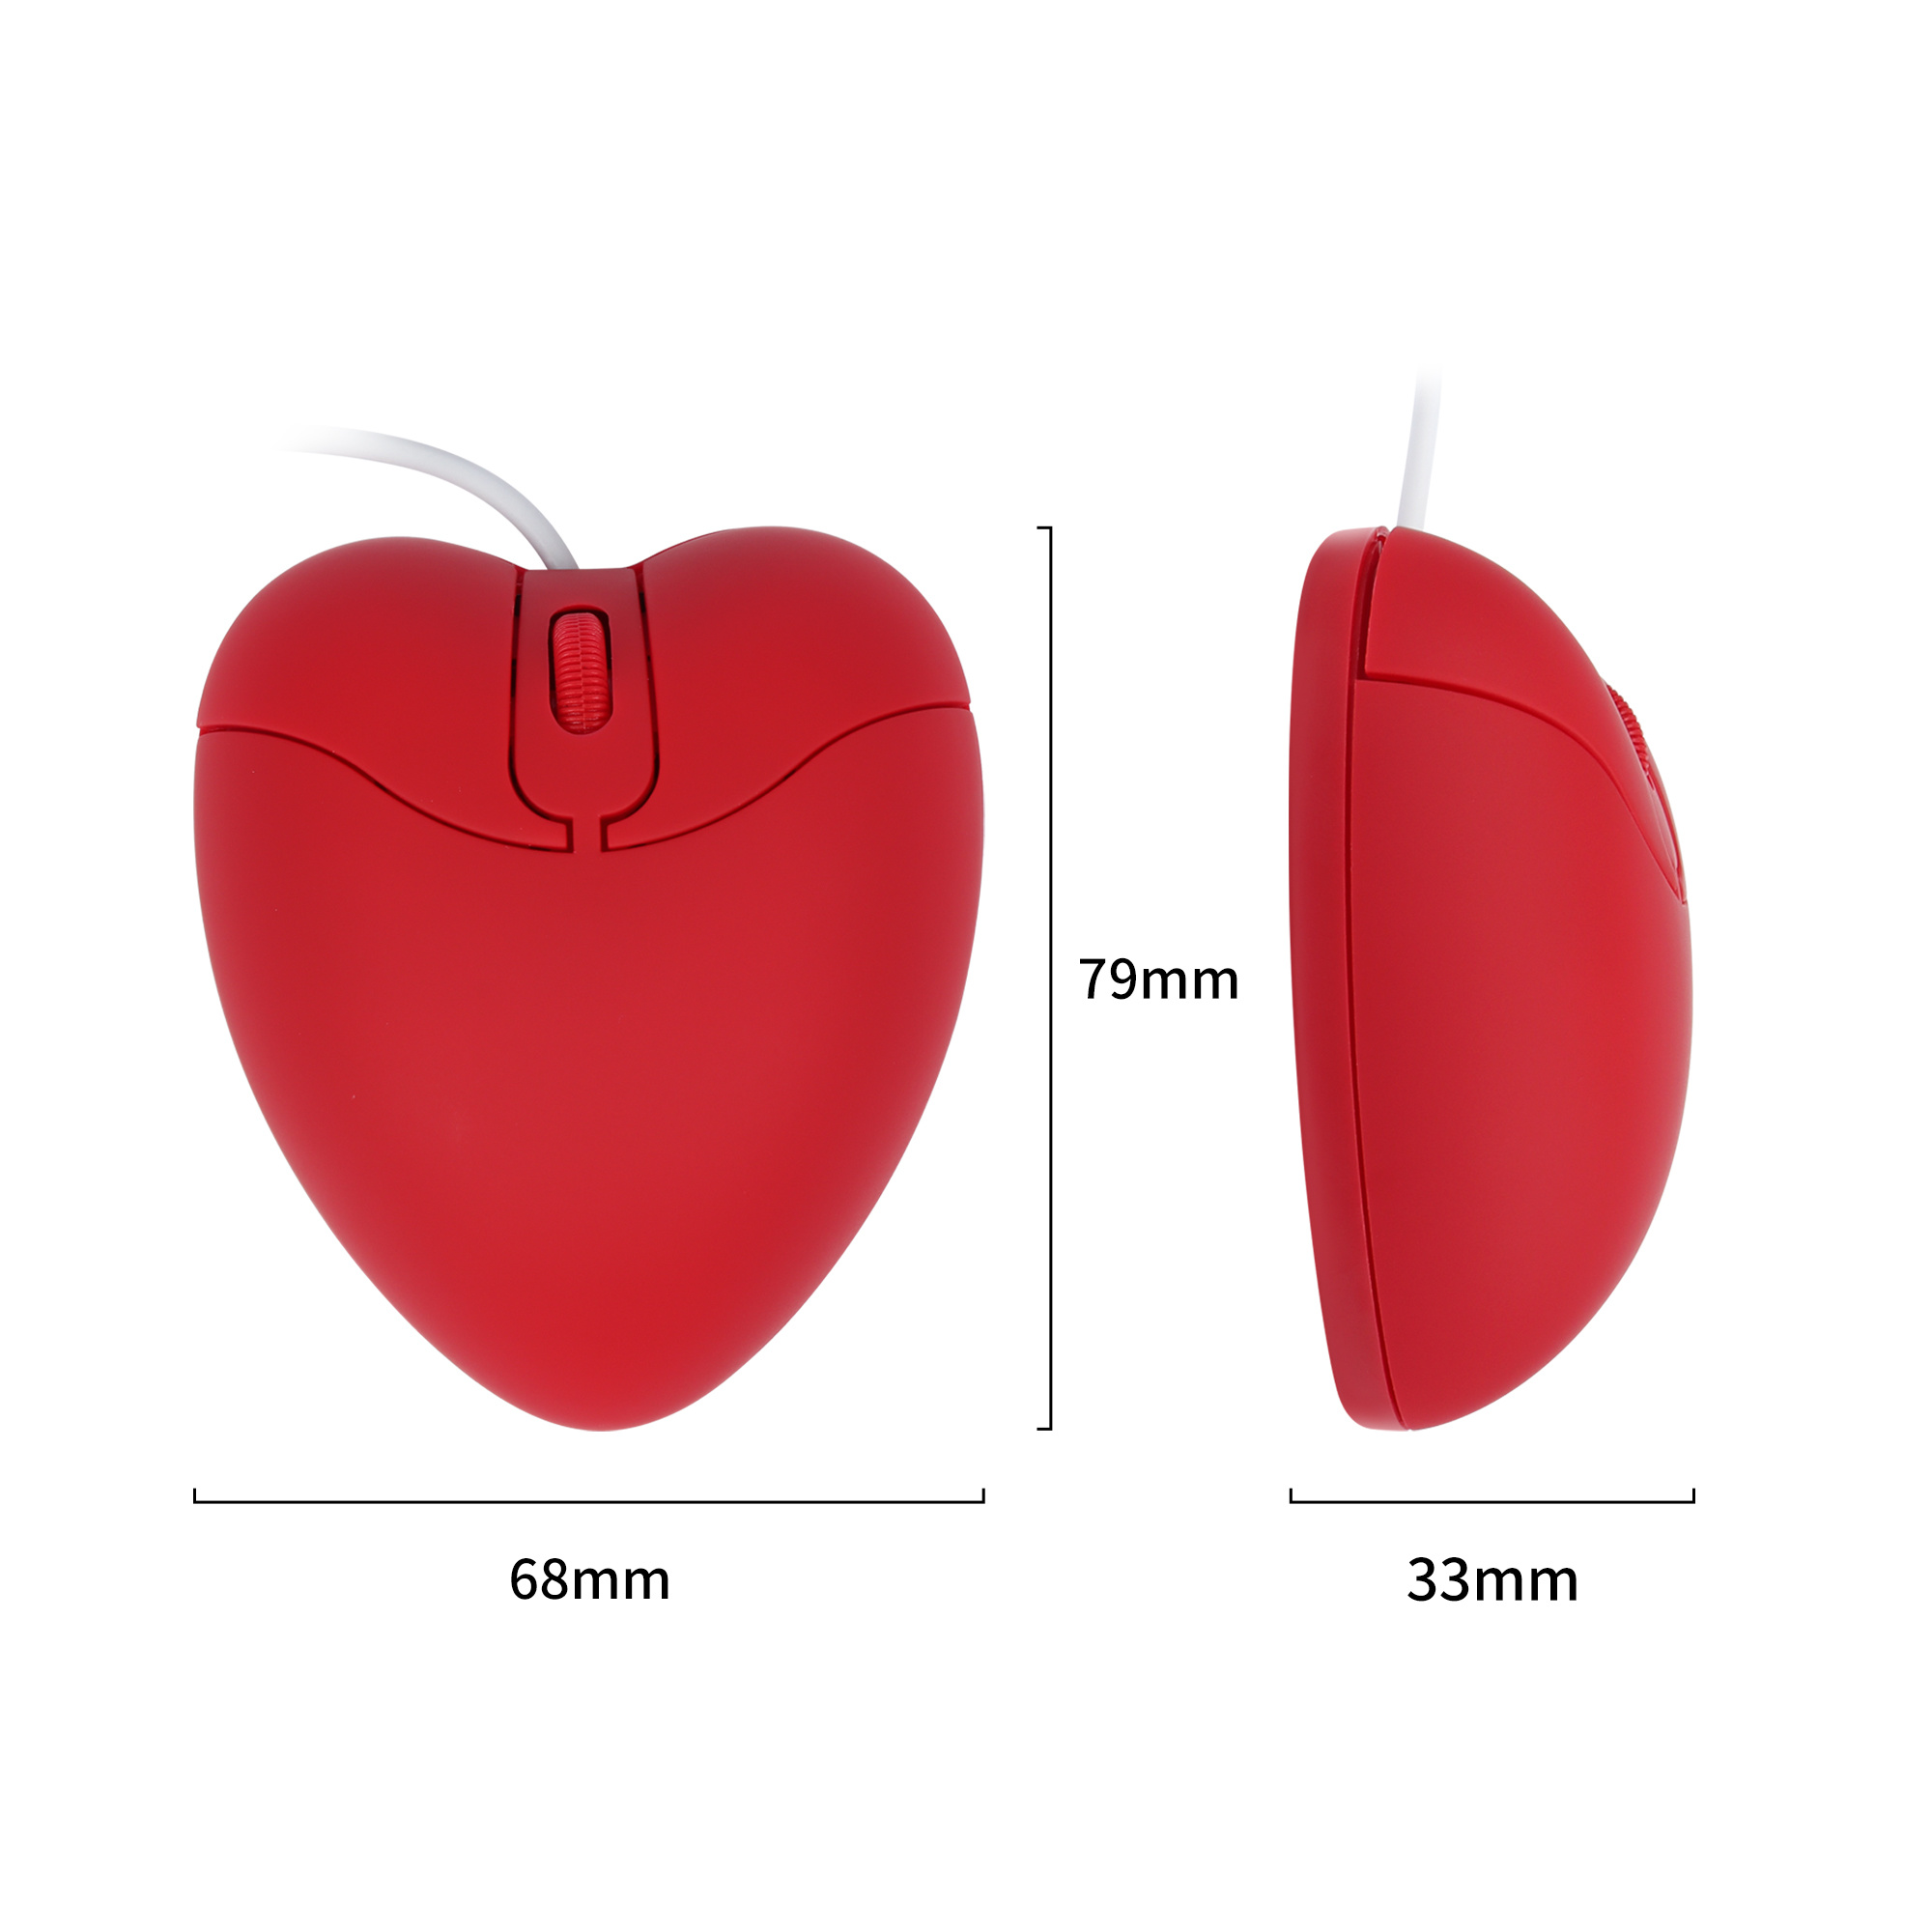 Computer-Wired-Mouse-USB-optical-Creative-Gaming-Cute-Mause-Ergonomic-Love-Heart-3D-მაუსები-ლეპტოპისთვის (4)